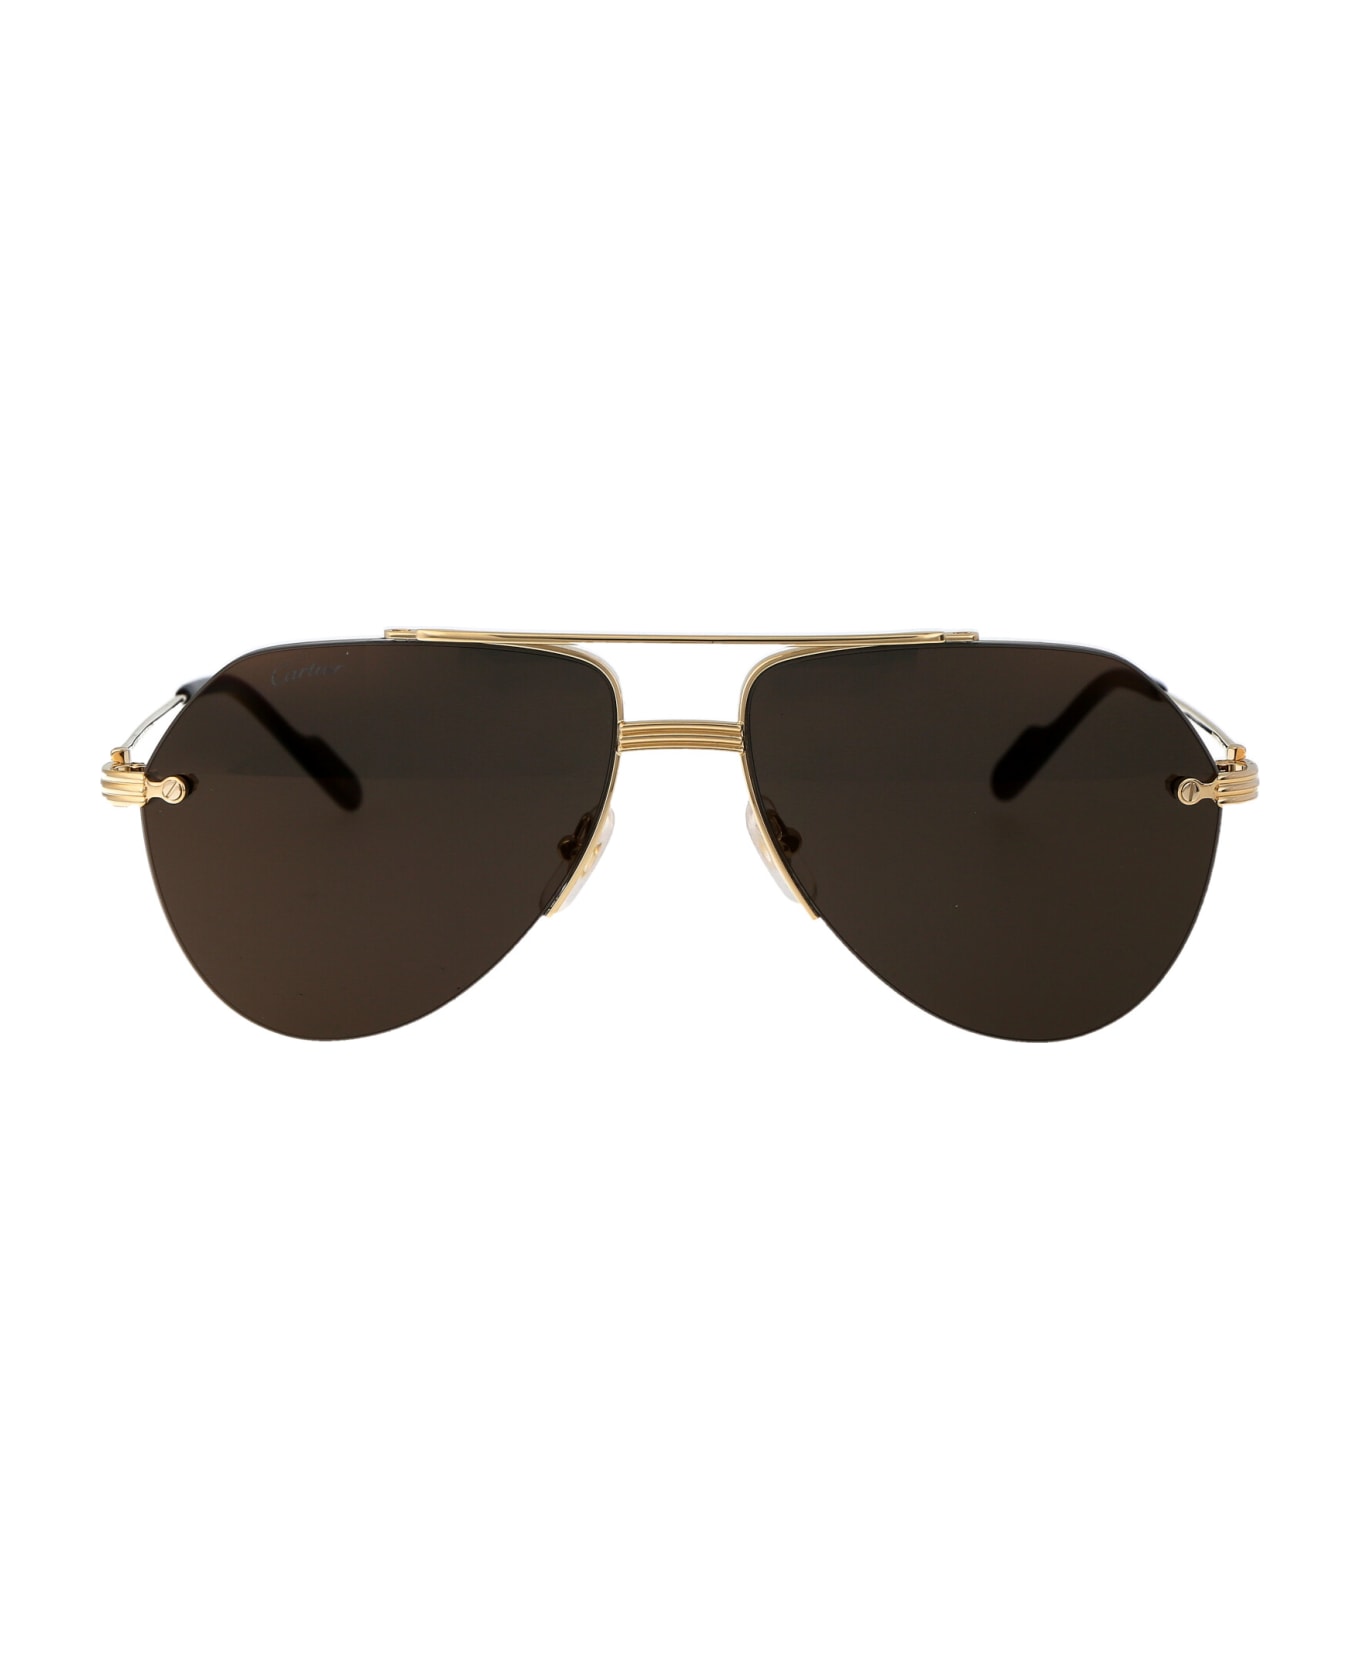 Cartier Eyewear Ct0427s Sunglasses - 005 GOLD GOLD GREY サングラス